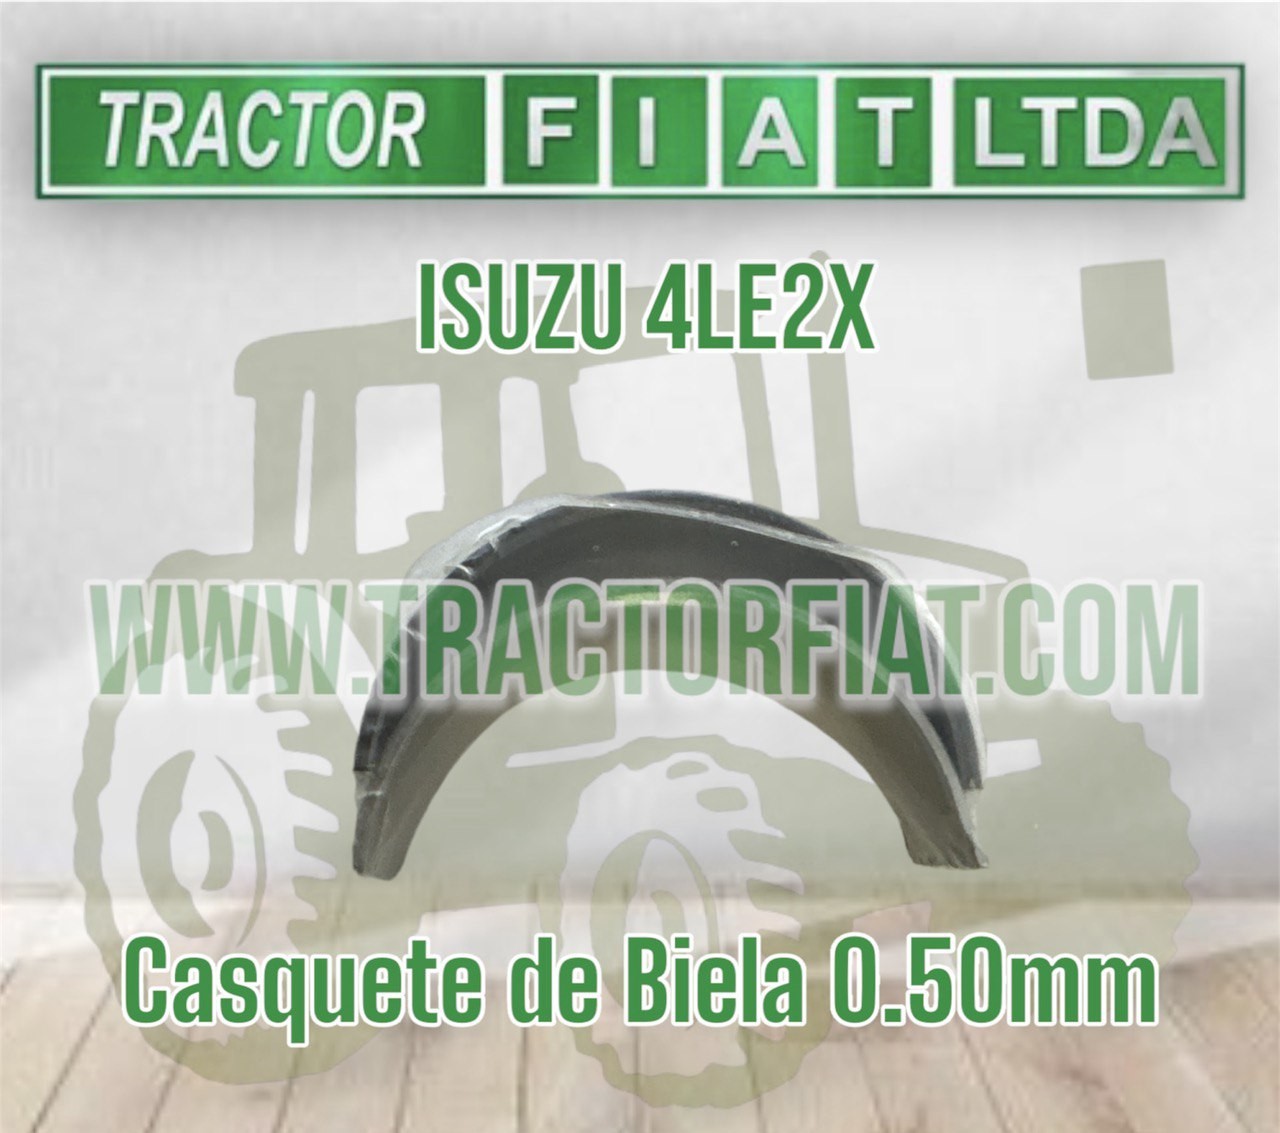 CASQUETES BIELA 0.50 MM - MOTOR ISUZU 4LE2X